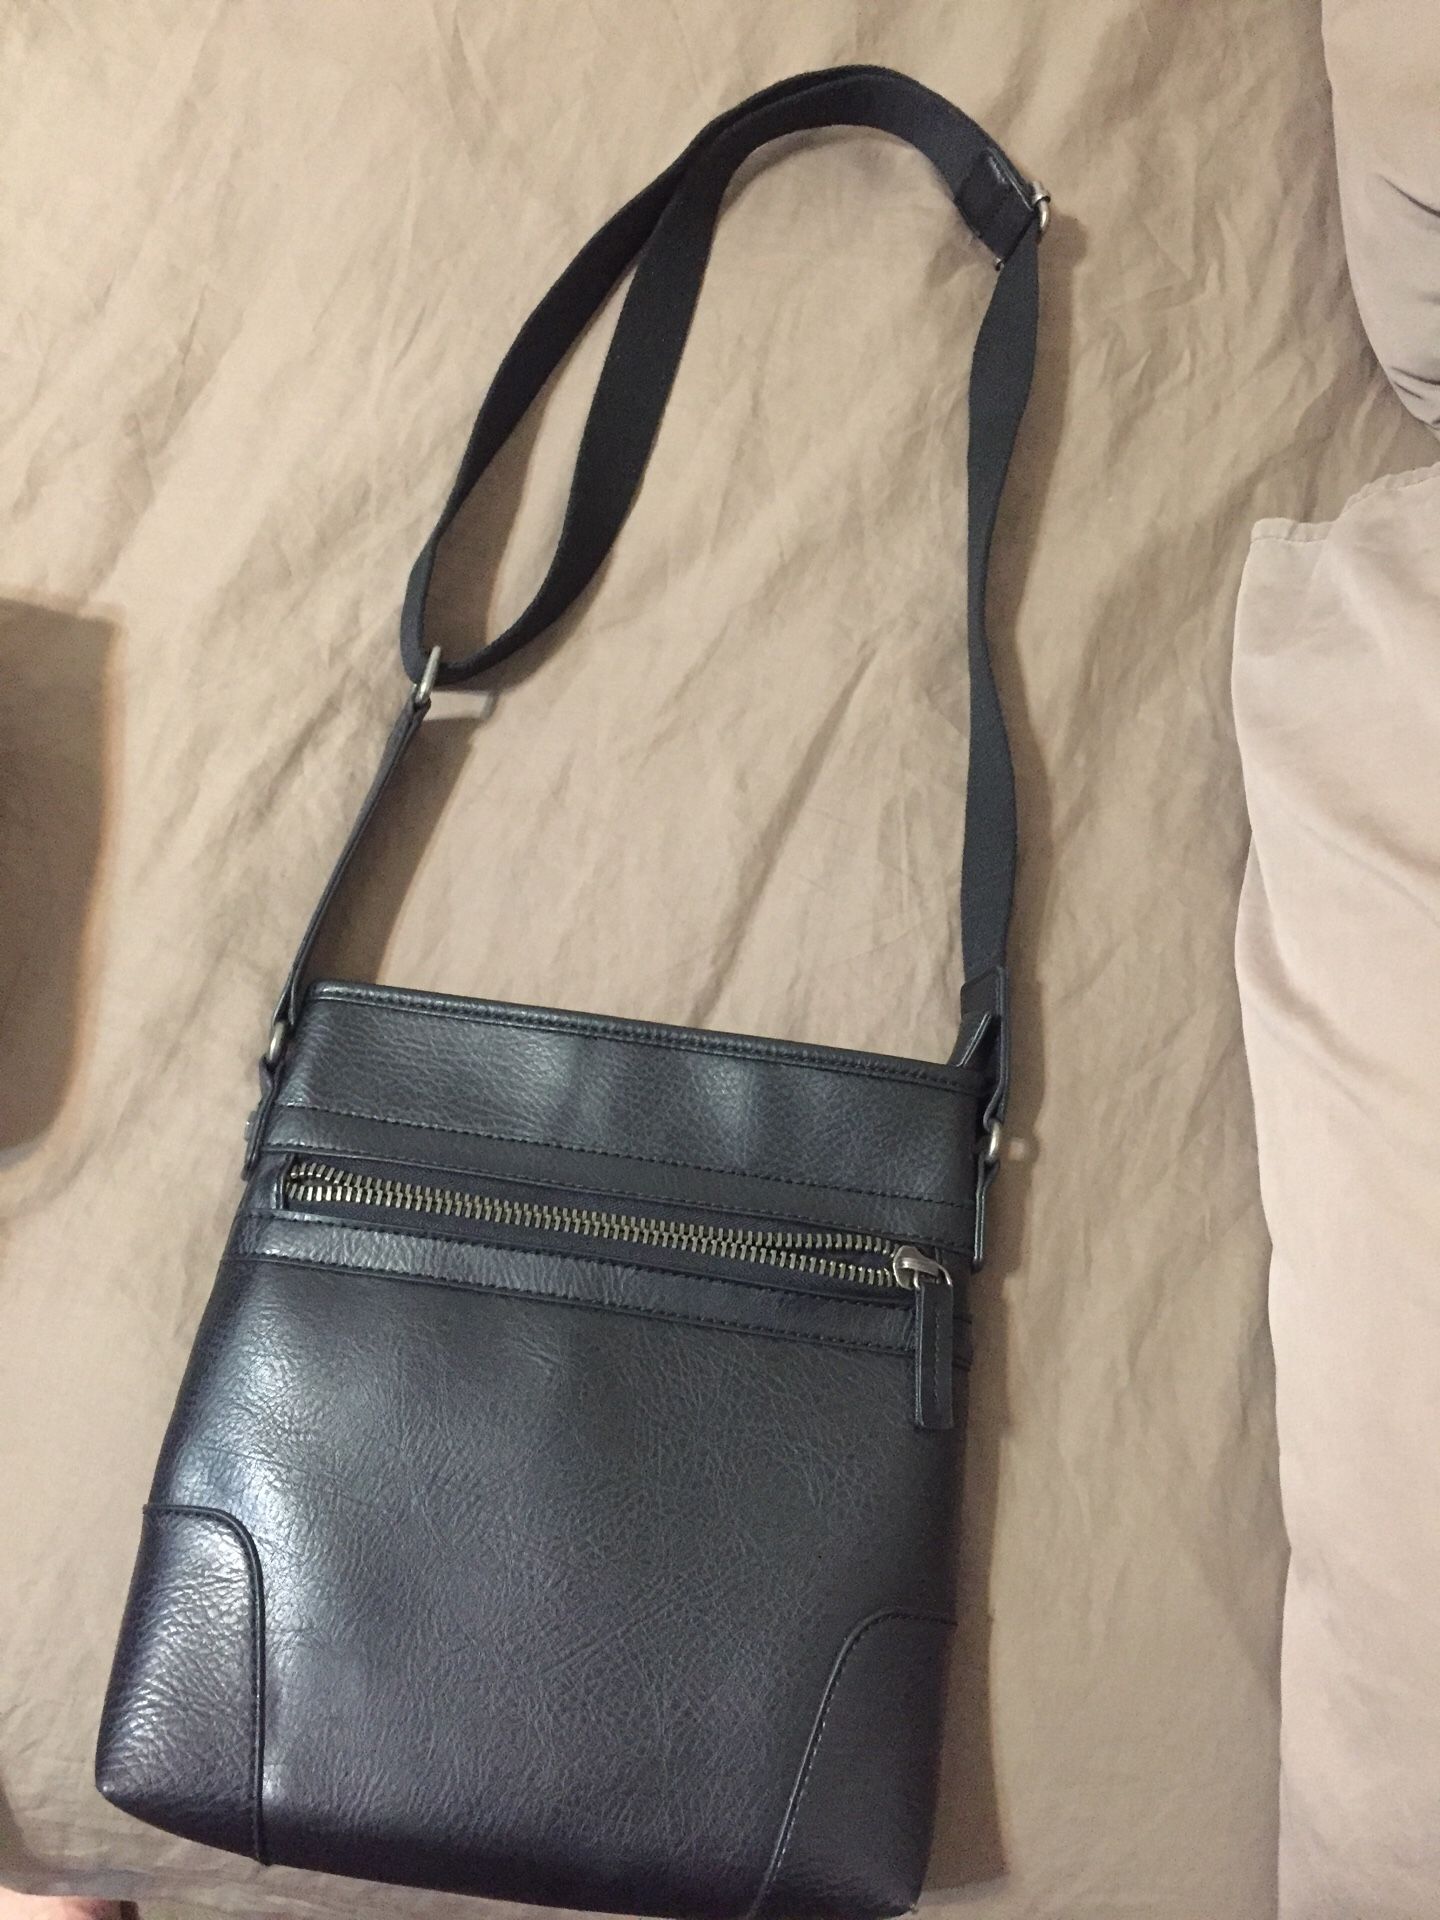 Aldo messenger leather bag for men with ipad case.